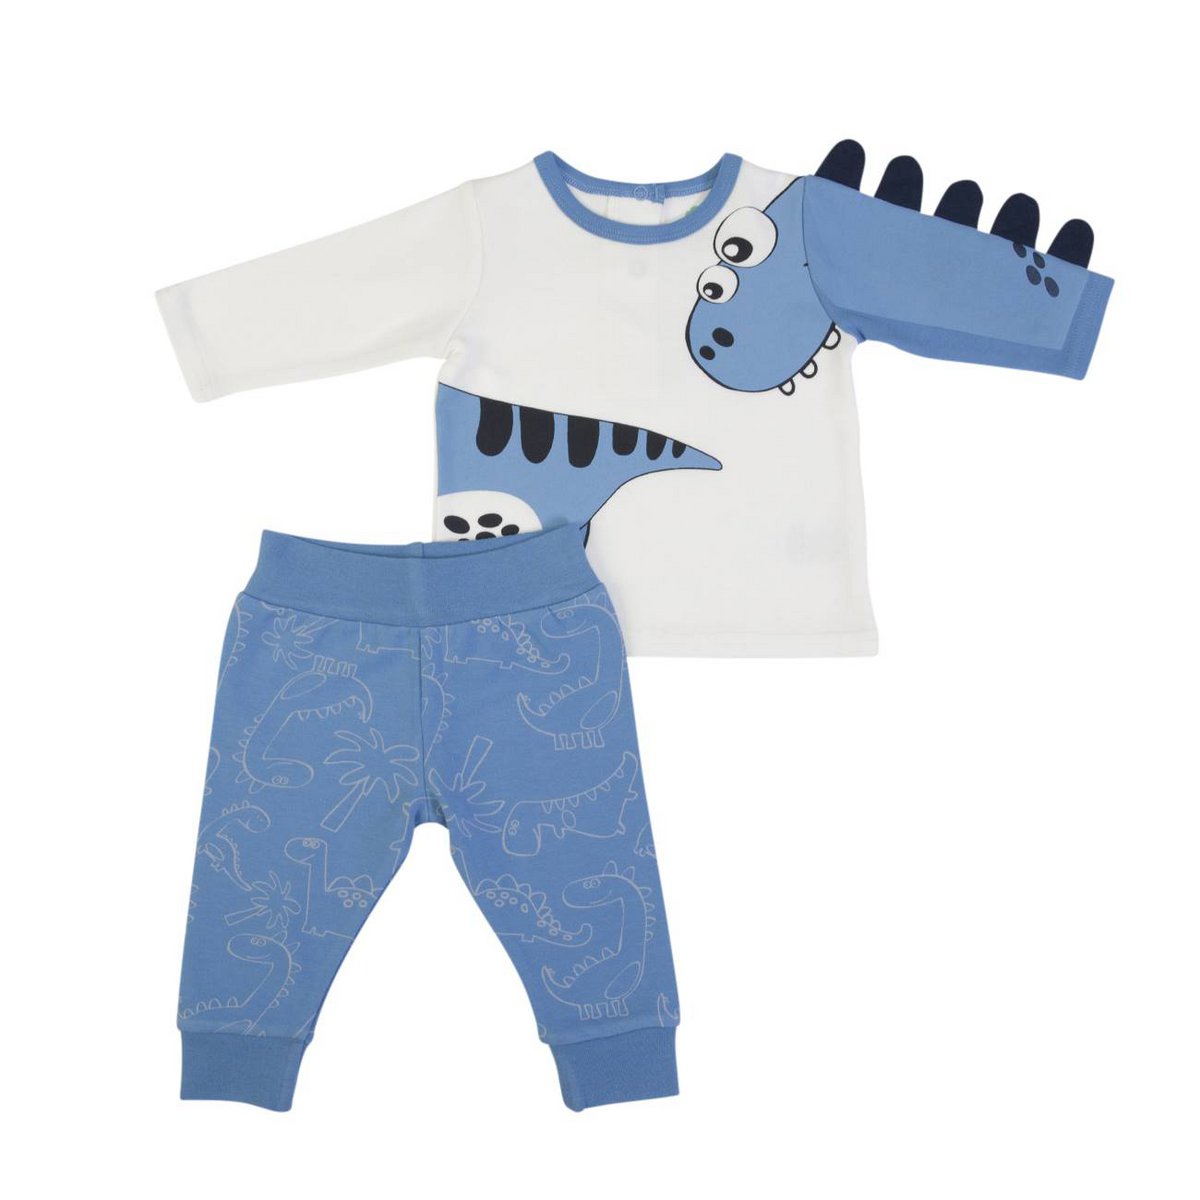 Ook Teleurgesteld geleider FS baby pyjama blauw/wit dino. - ILKYMA